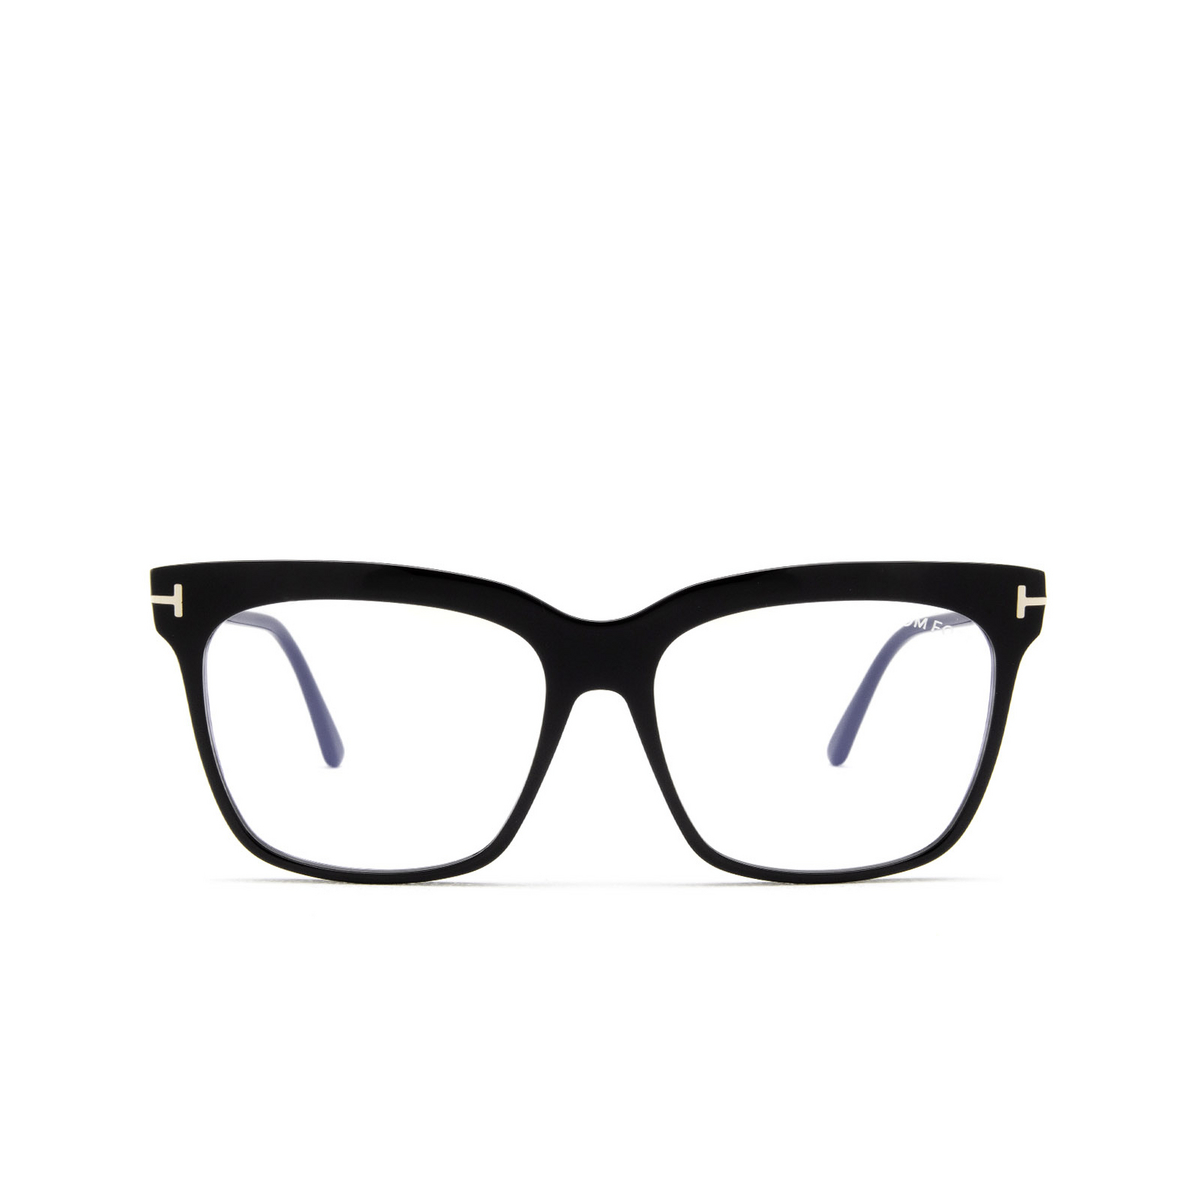 Tom Ford® Square Eyeglasses: FT5768-B color Black 001 - front view.